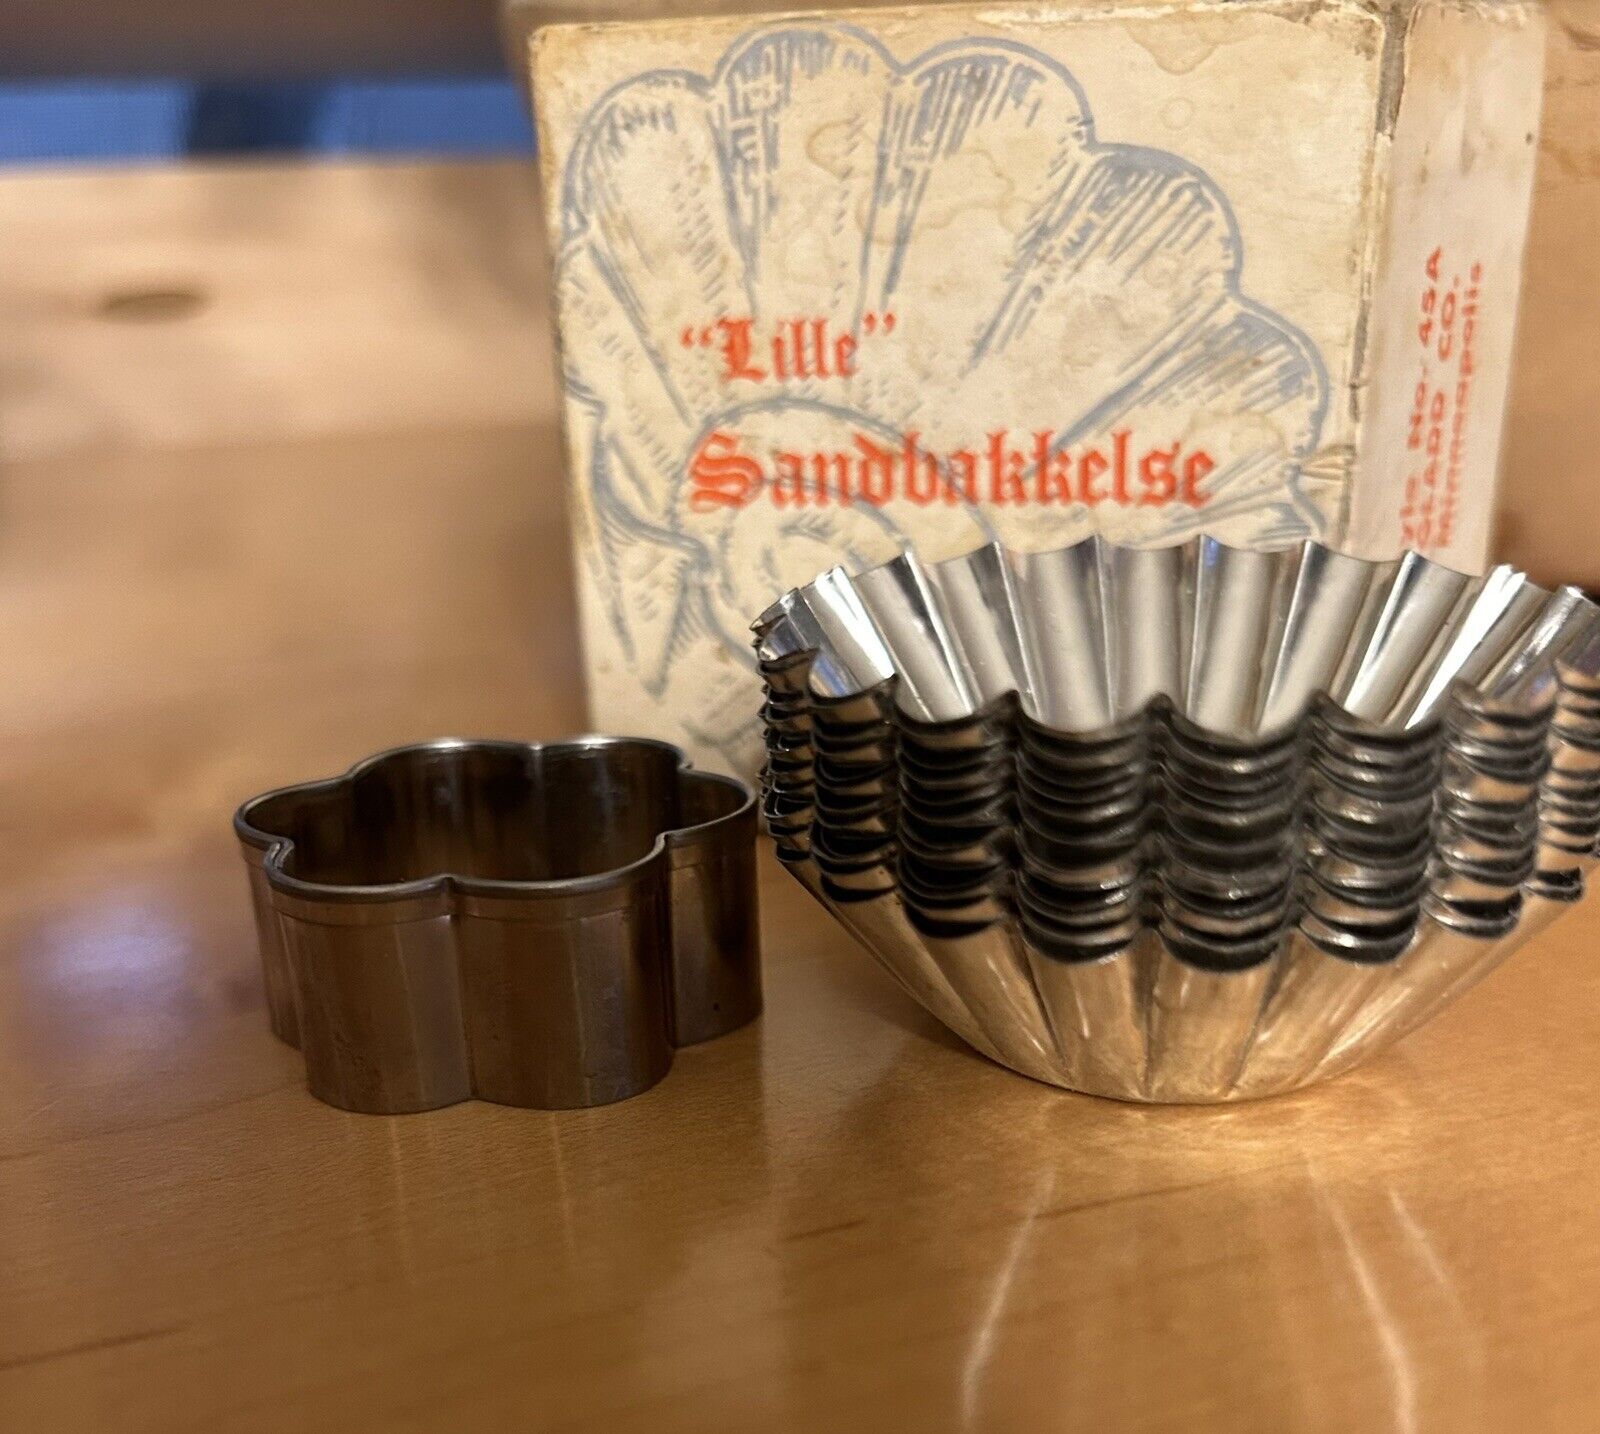 Vintage “Lille” Sandbakkelse Set Tins Tins In Box Minneapolis Gladd Co